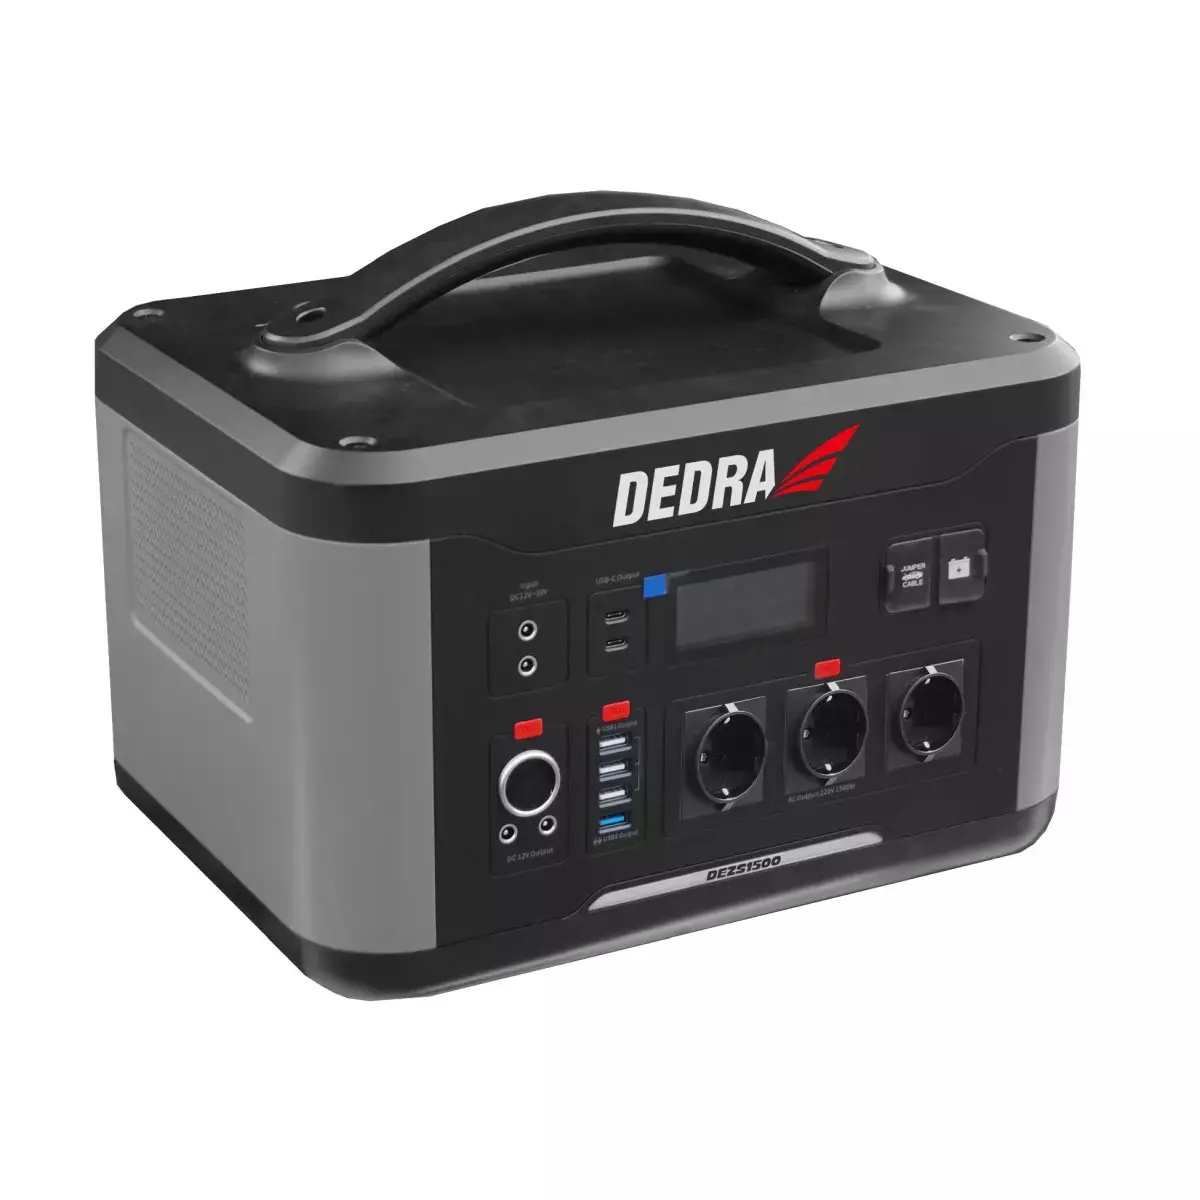 Statie de alimentare electrica DEDRA 1500 3000W 55Ah prize AC incorporate 3x230V 50Hz, DC 12V 10A, port USB 2.0×3, USB 3.0×1, USB Cx1, 12Vx2, priza auto, LED, LCD (50Hz)